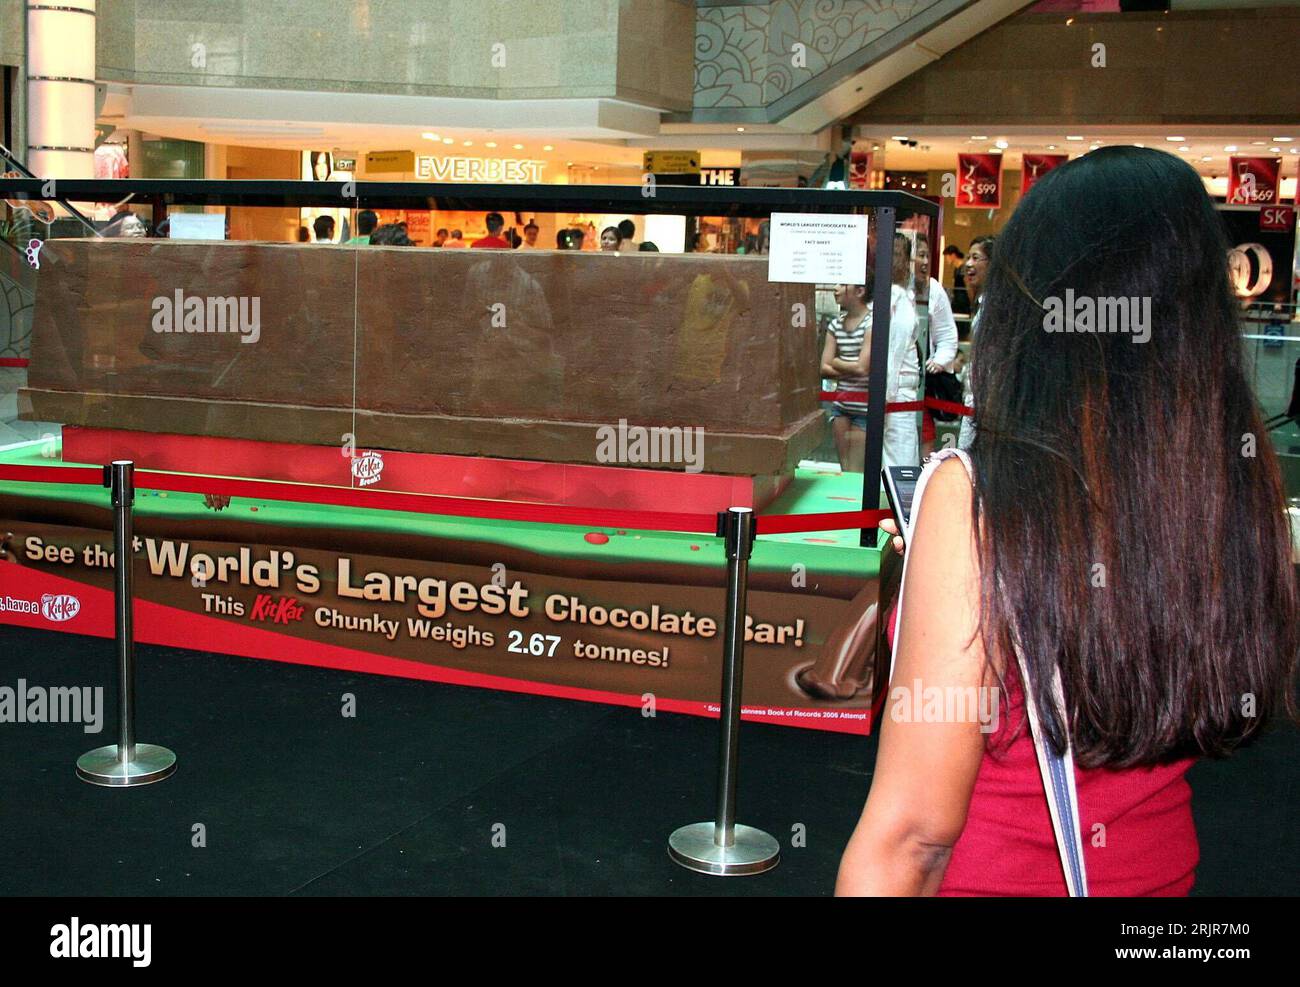 Frau betrachtet den größten Schokoriegel der Welt - Gewicht 2,67 Tonnen - im Plaza Singapura in Singapur PUBLICATIONxNOTxINxCHN Stock Photo